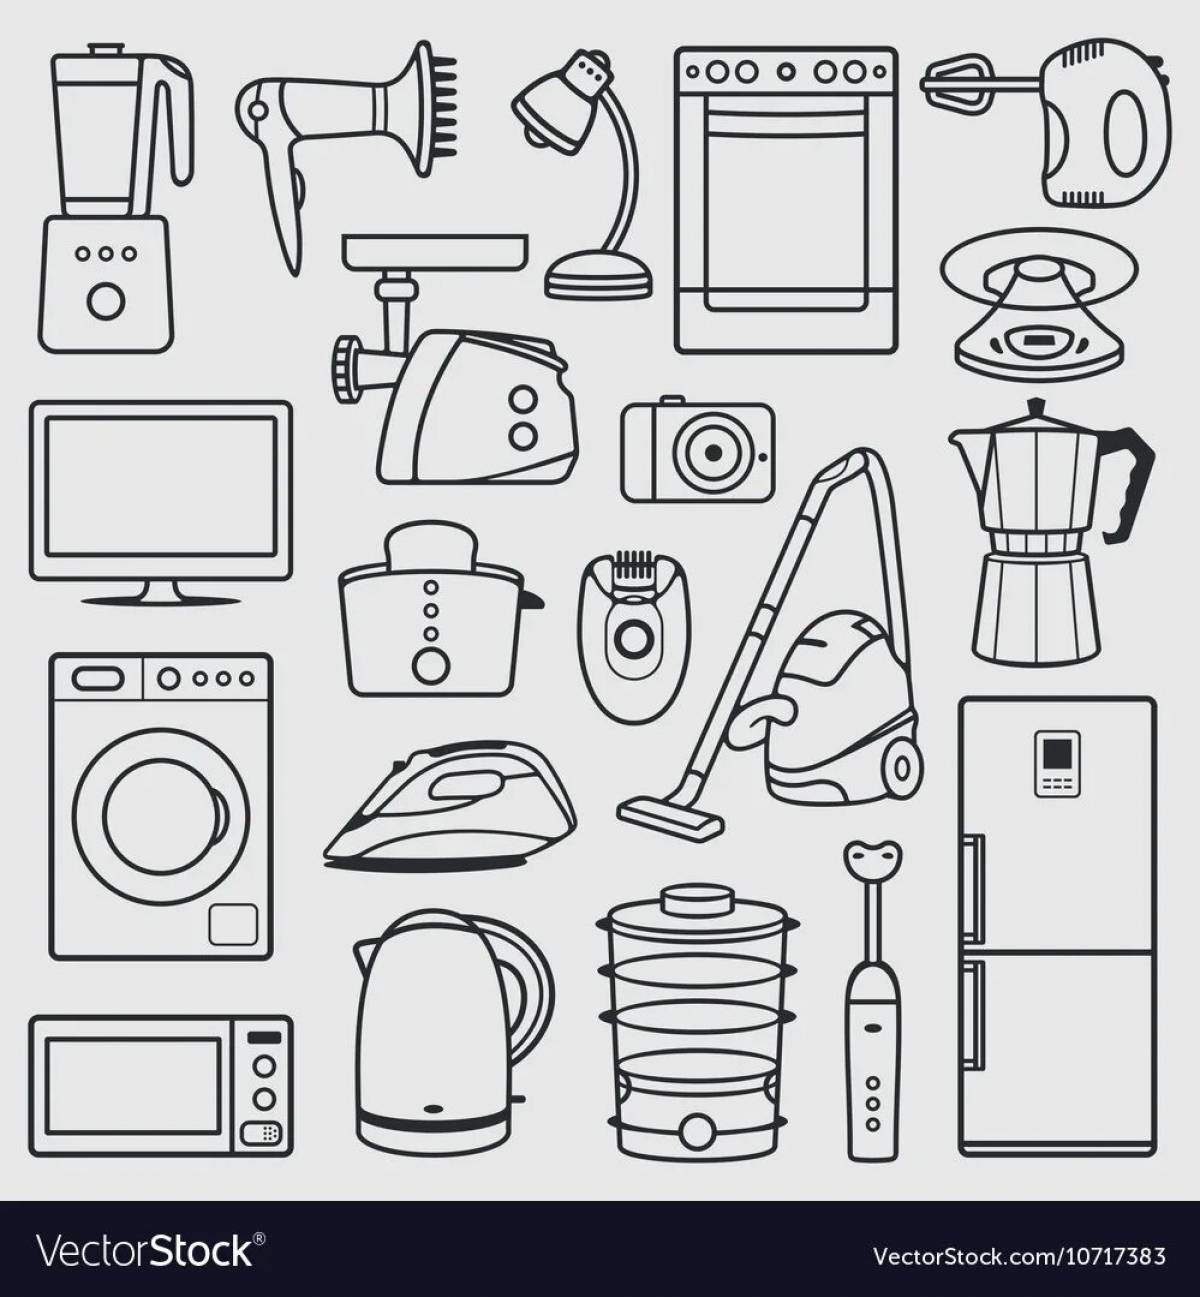 Household appliances for prep group #28